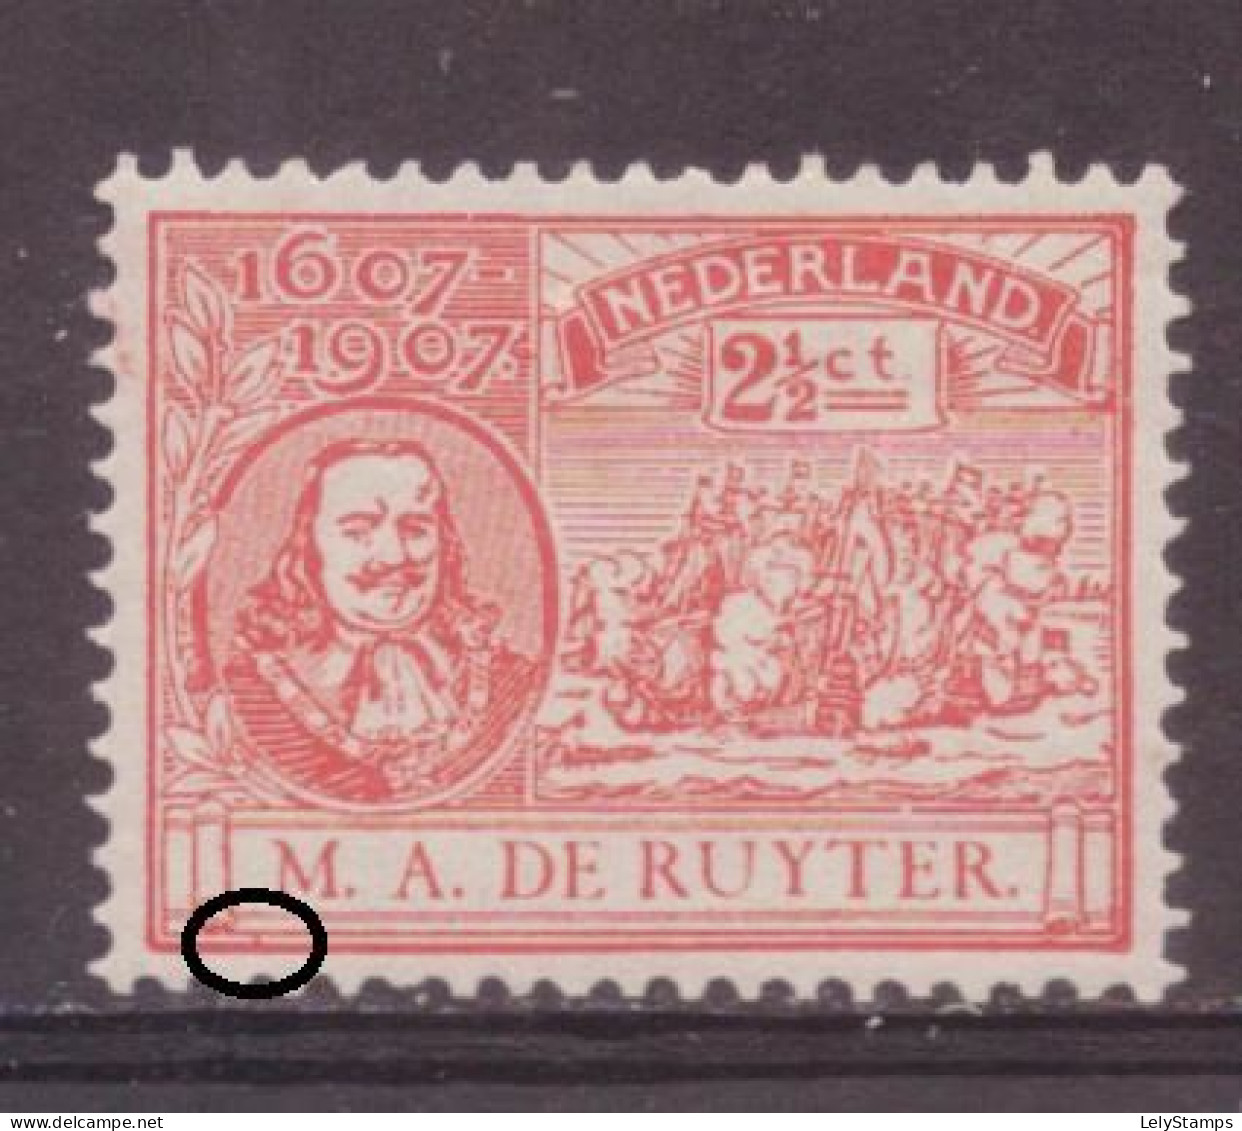 Nederland / Niederlande / Pays Bas NVPH 89 P Plaatfout Plate Error MH * (1907) - Variétés Et Curiosités